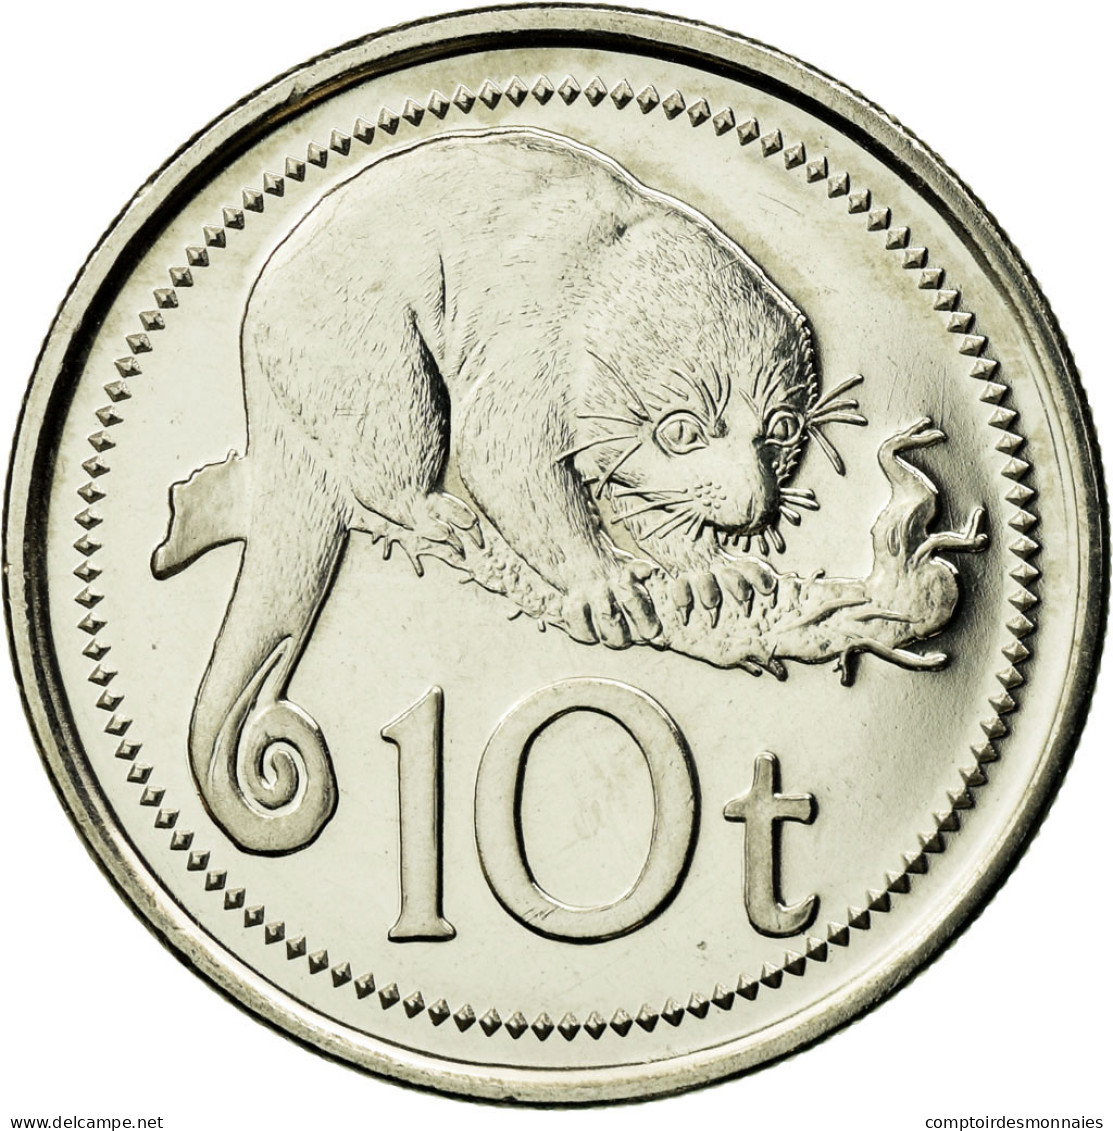 Monnaie, Papua New Guinea, 10 Toea, 2006, SPL, Nickel Plated Steel, KM:4a - Papouasie-Nouvelle-Guinée